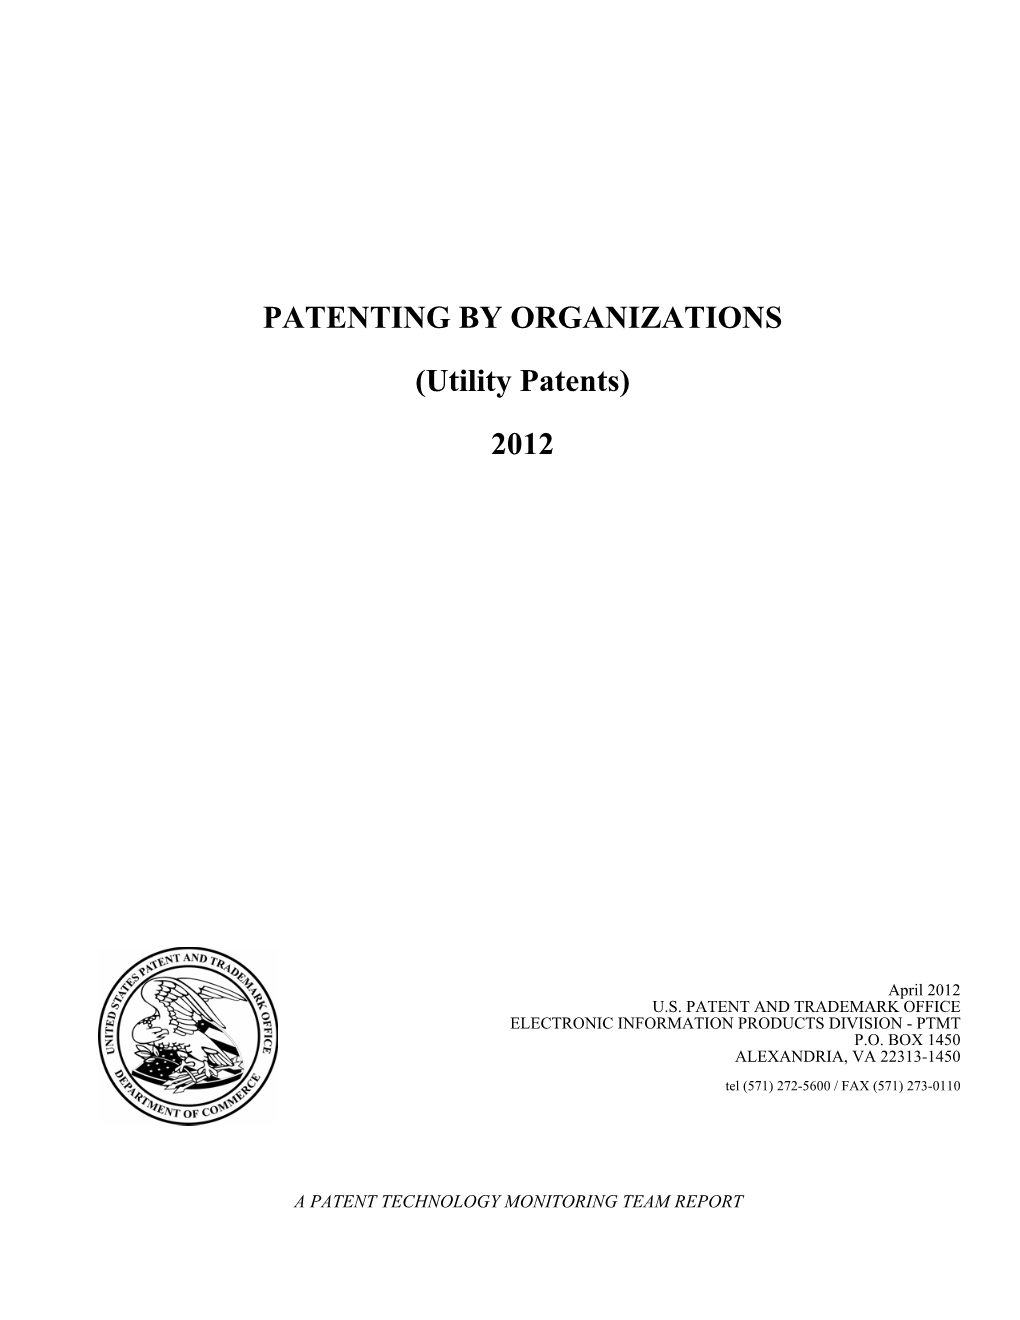 Utility Patents) 2012